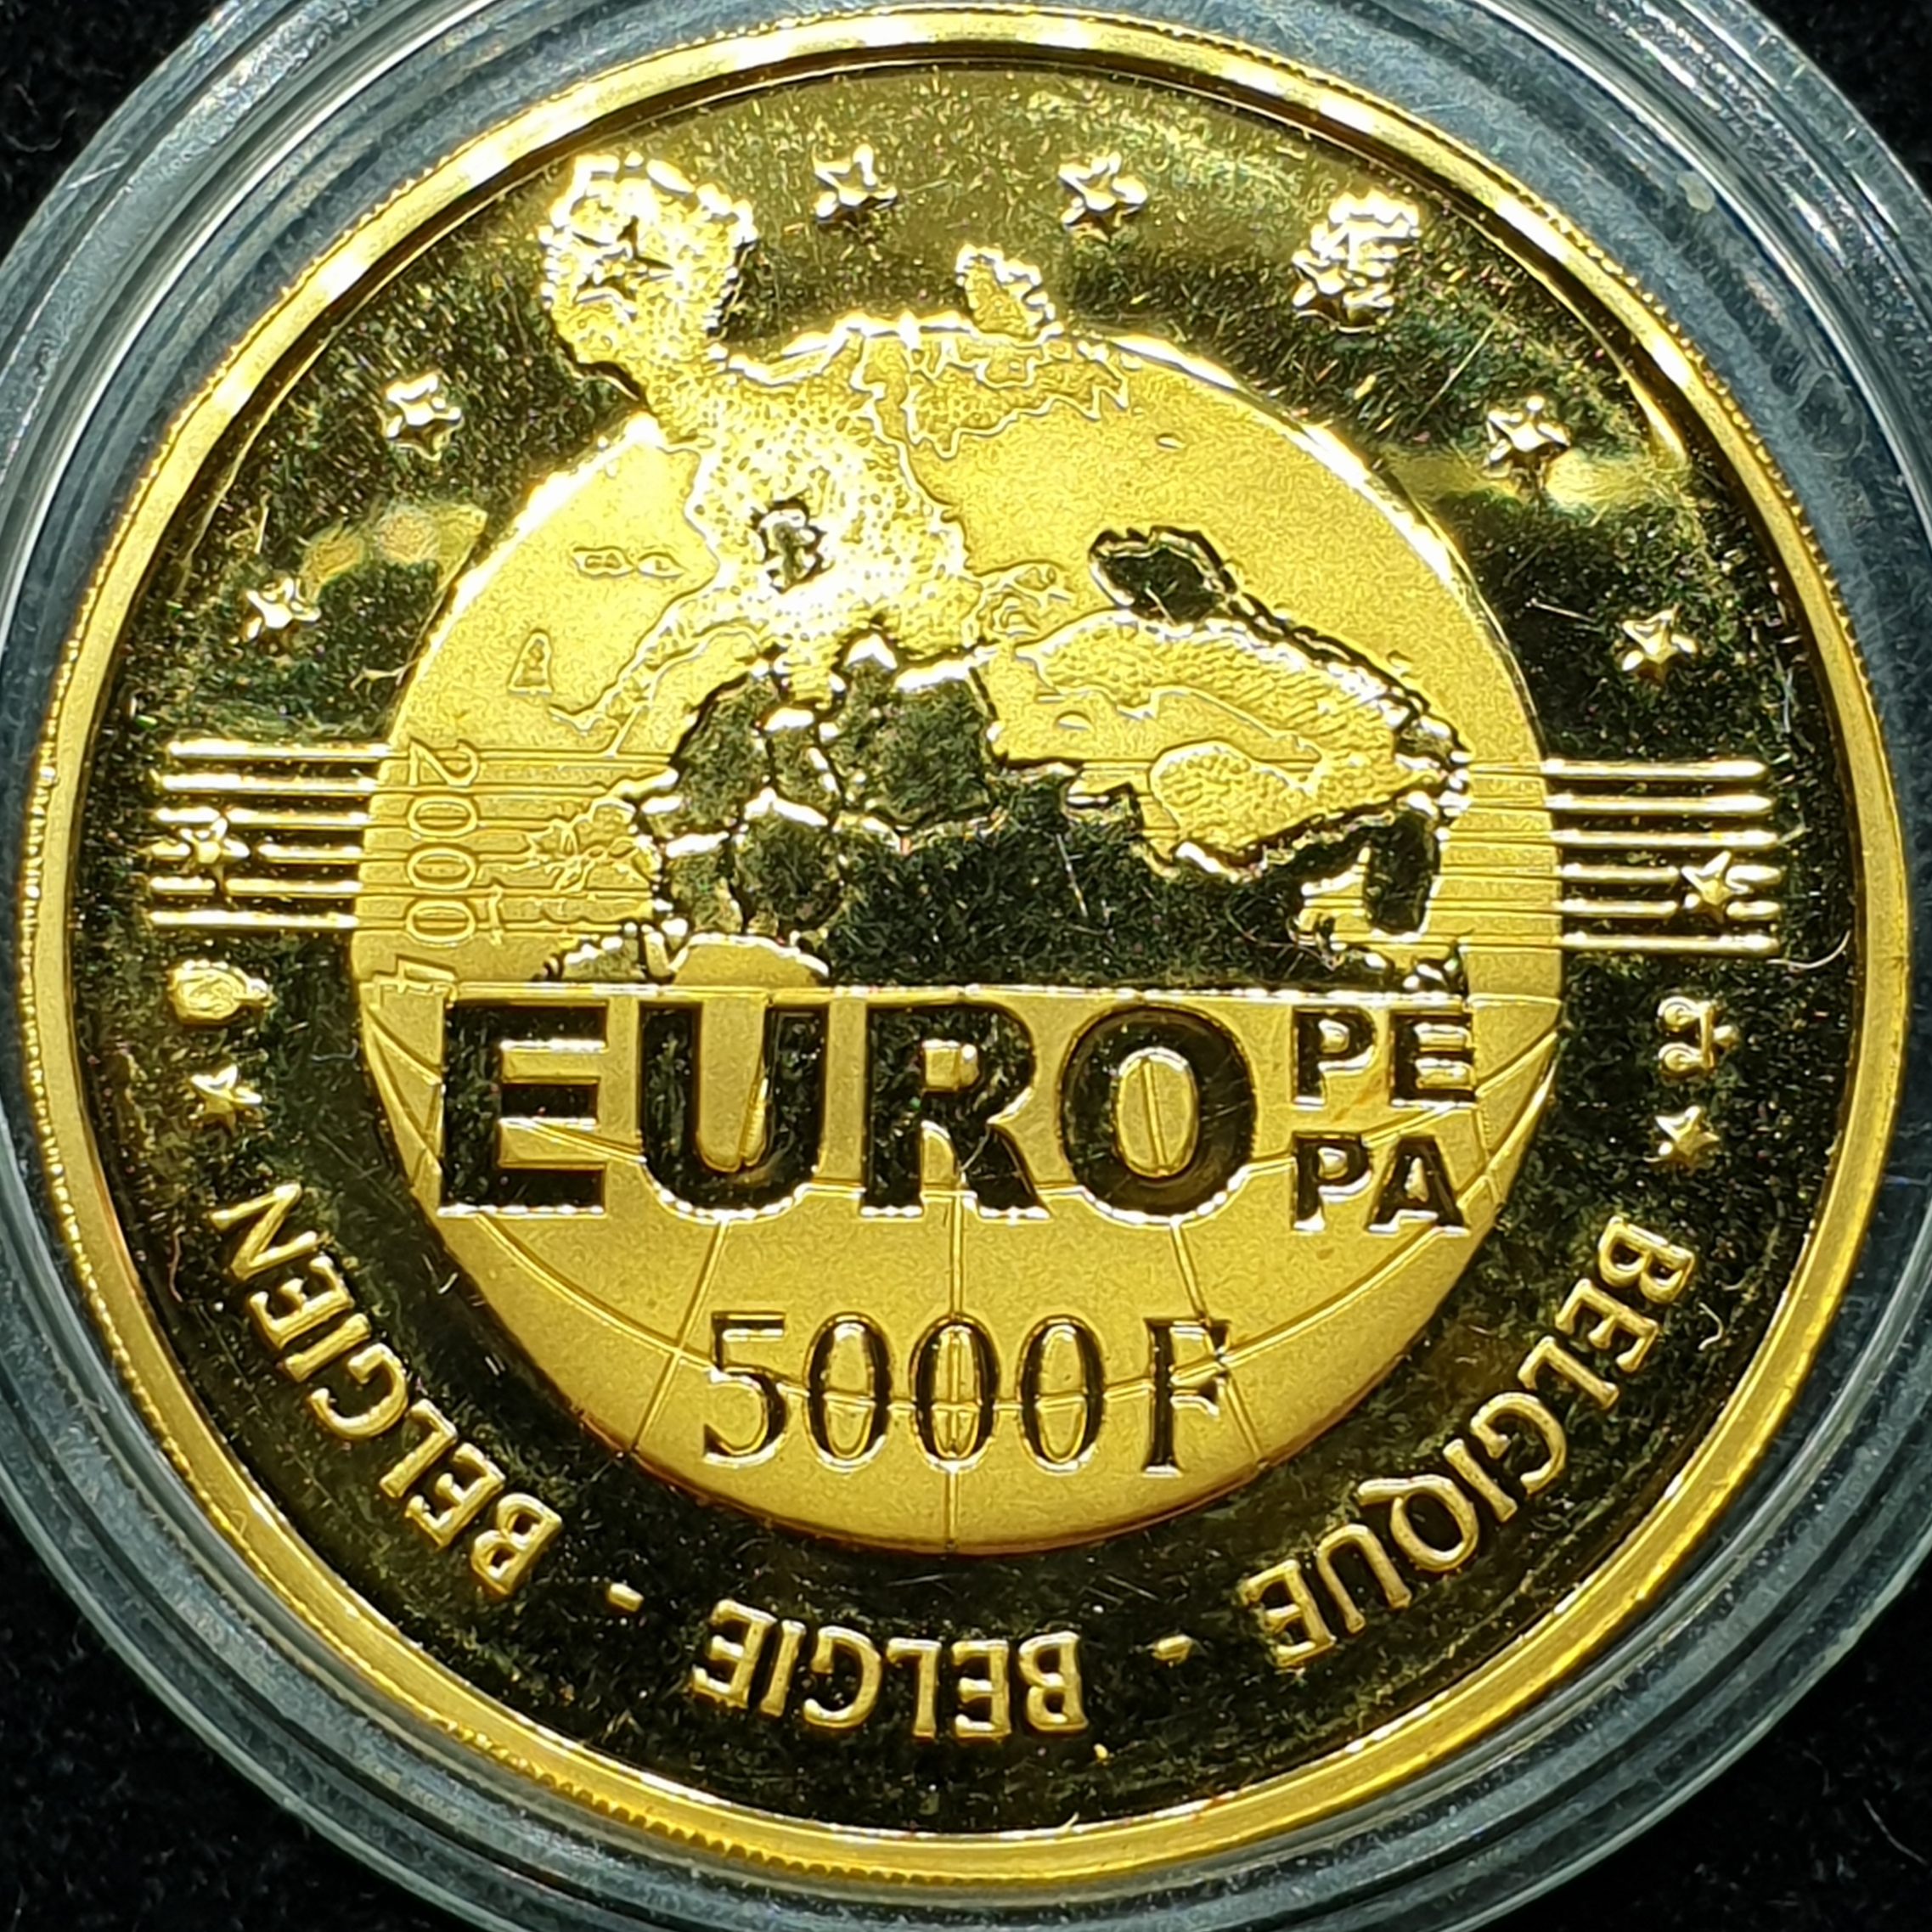 Belgium - 5000 francs - 2000 - 500th anniversary of birth of Charles V - 1/2oz